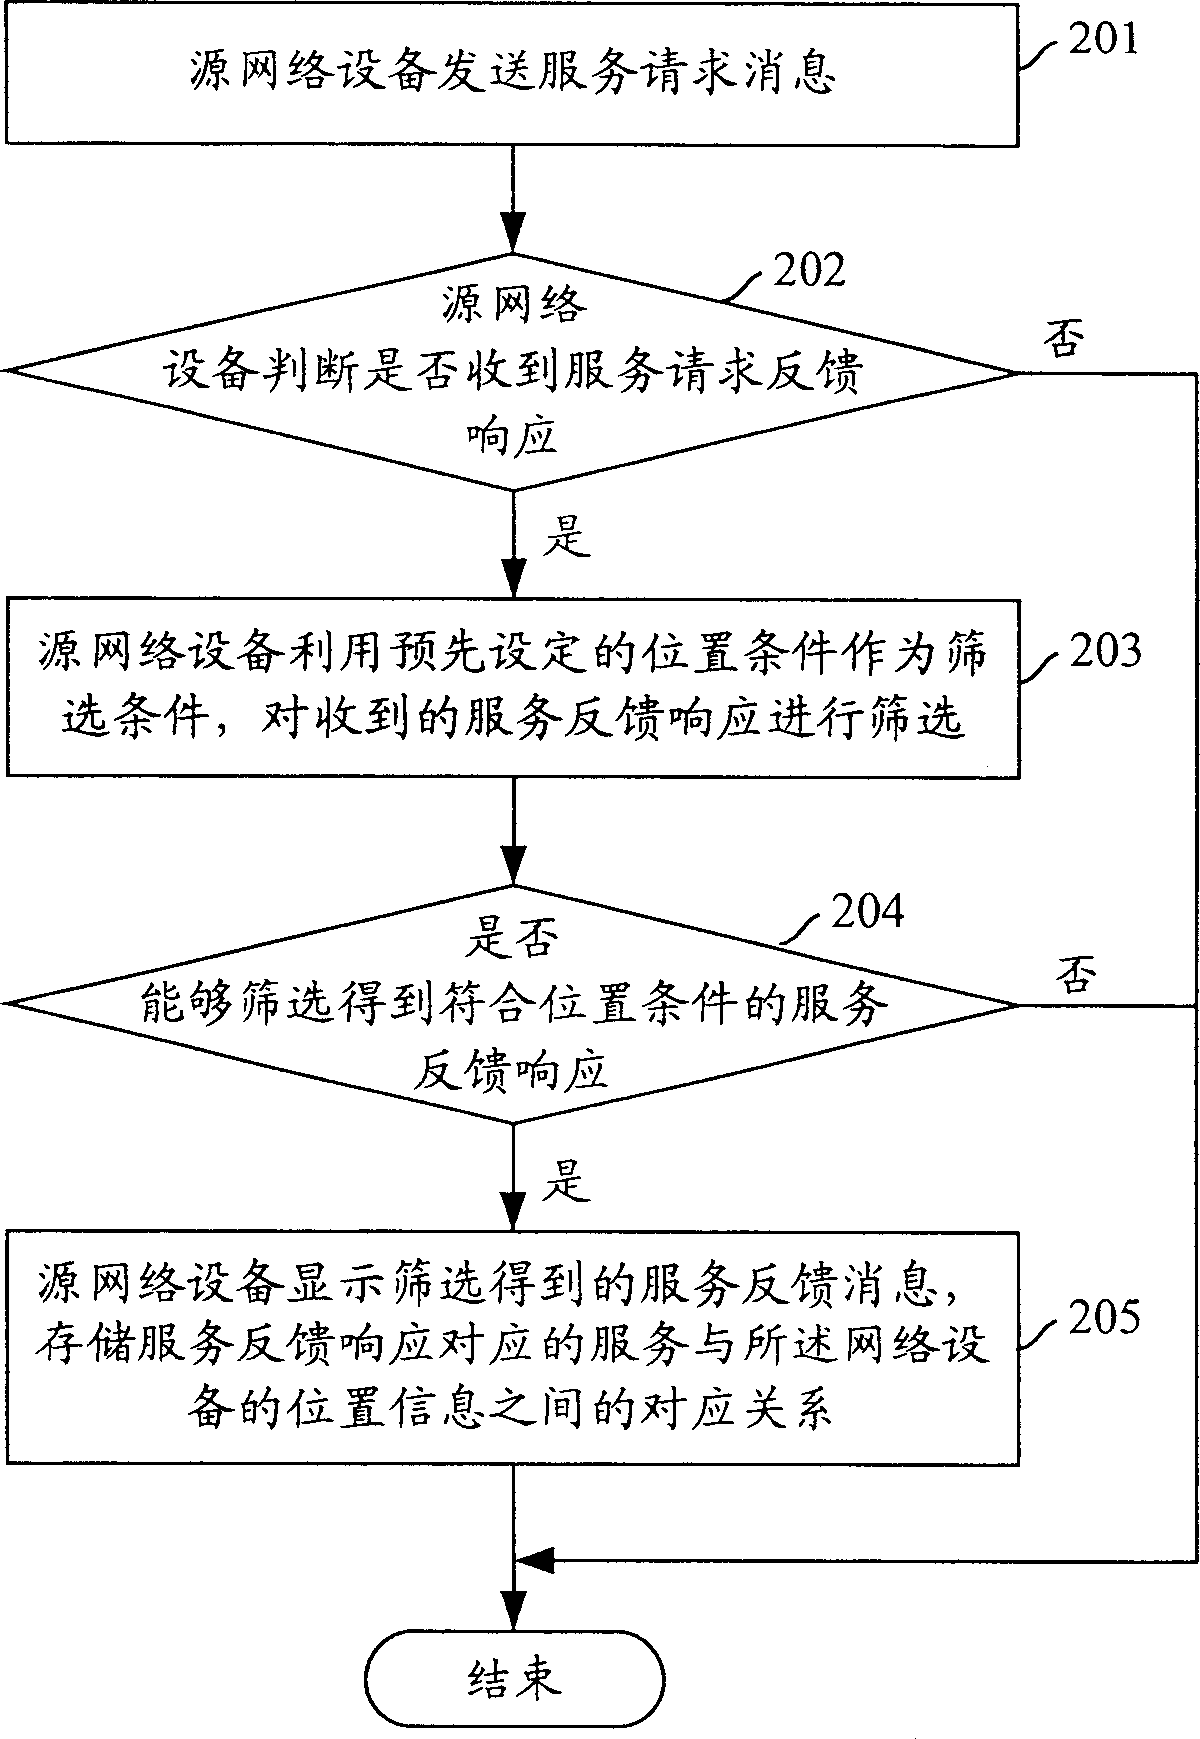 Connection method between devices in peer-to-peer network